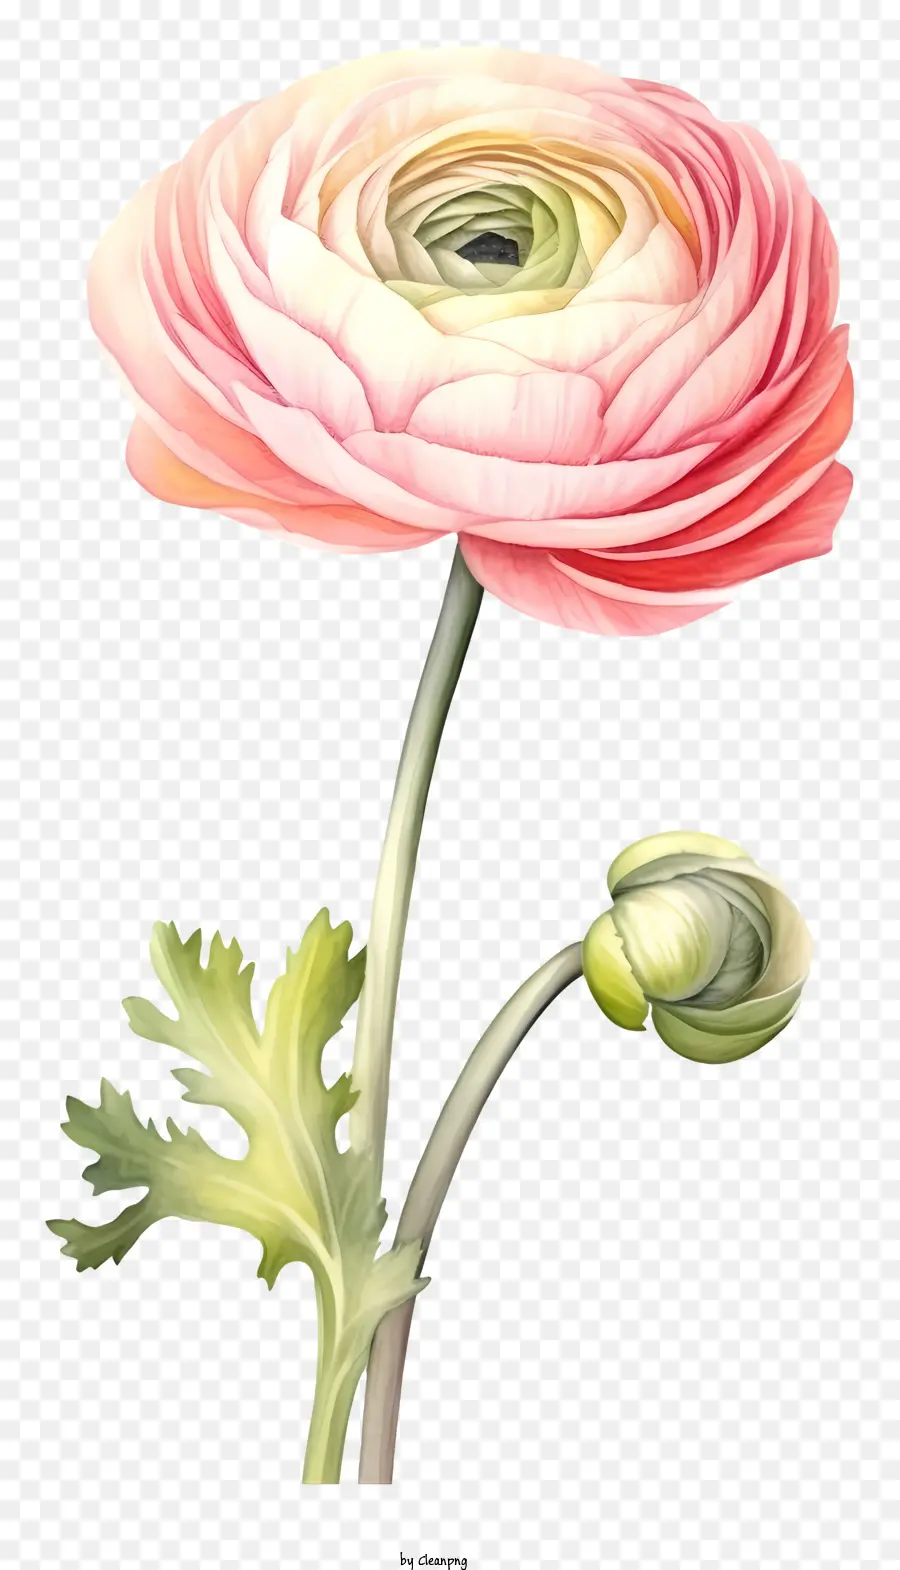 pink anemone flower stamen and pistil curled petals bloom leafy green plant